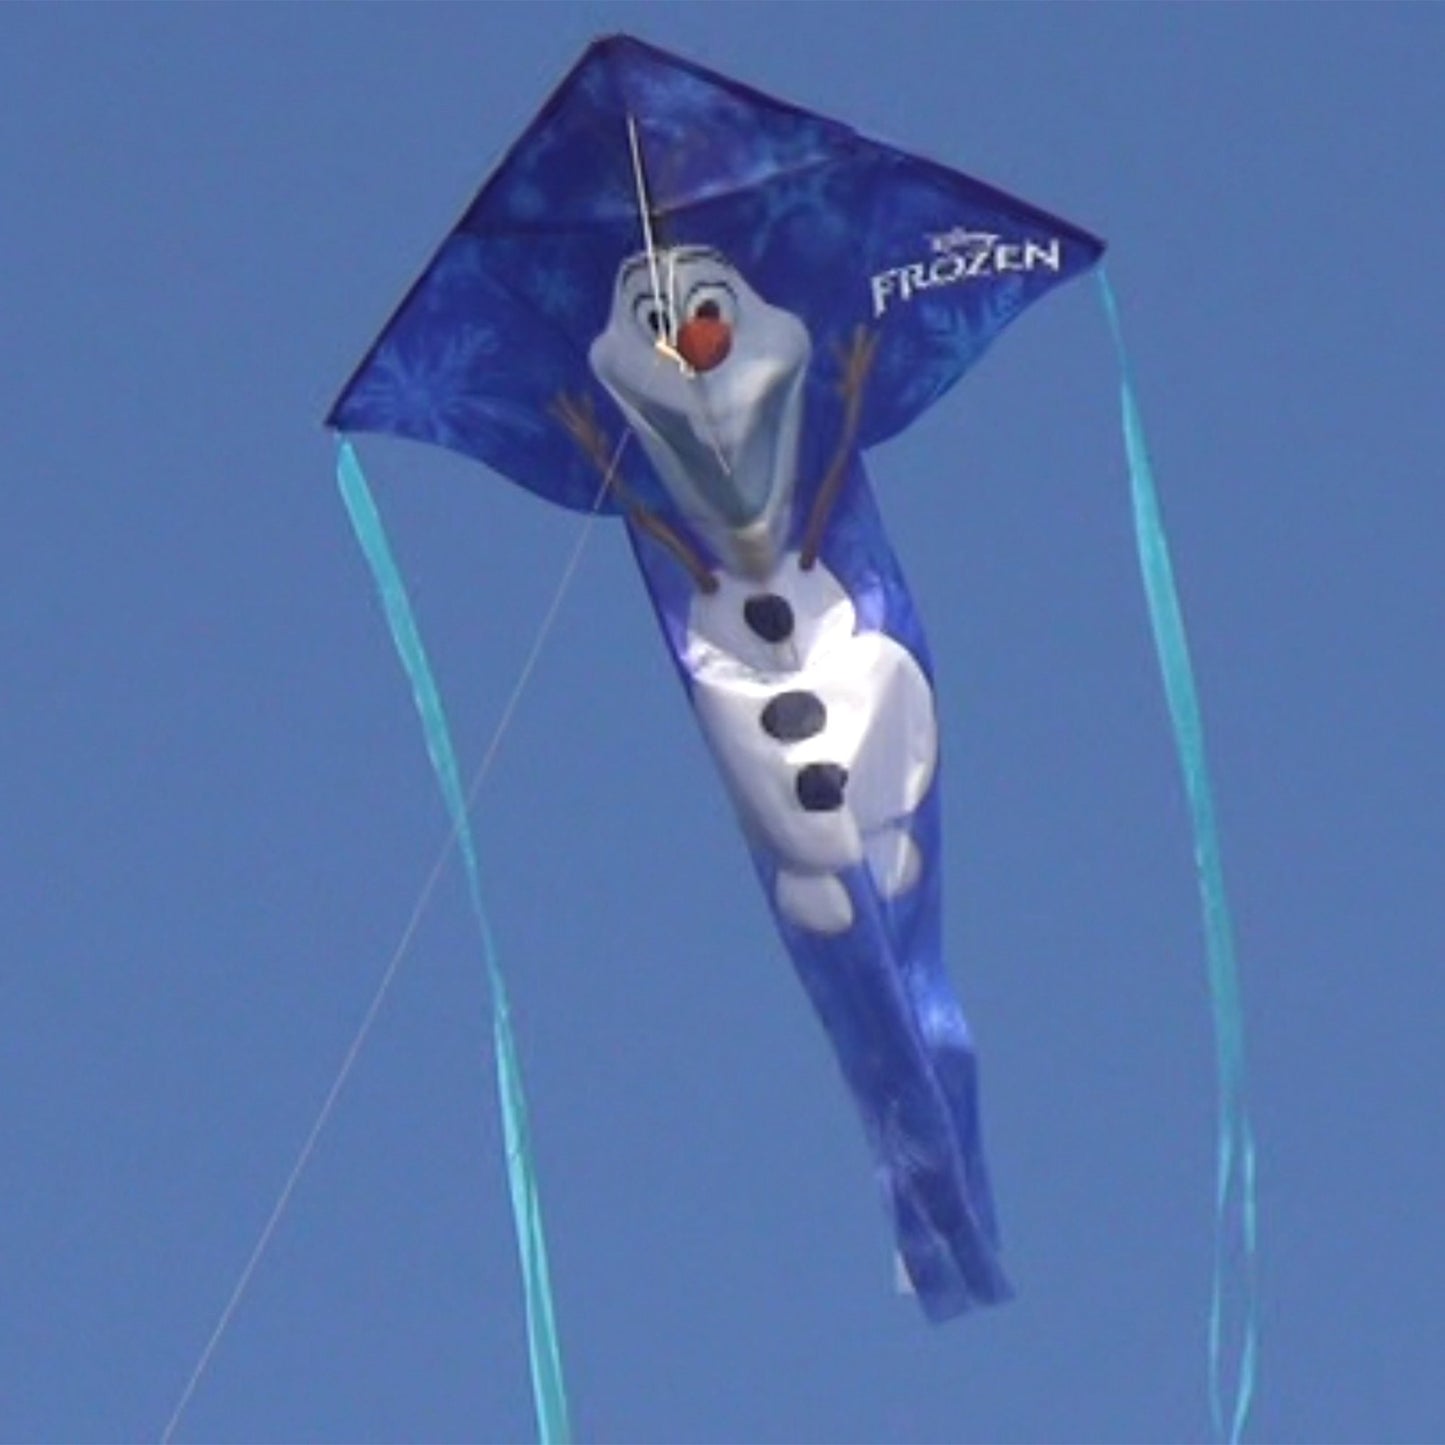 WindNSun BreezyFliers 57 Frozen Olaf + X Kites SuperSled Frozen 2 Nylon Kite Bundle photo of product in use